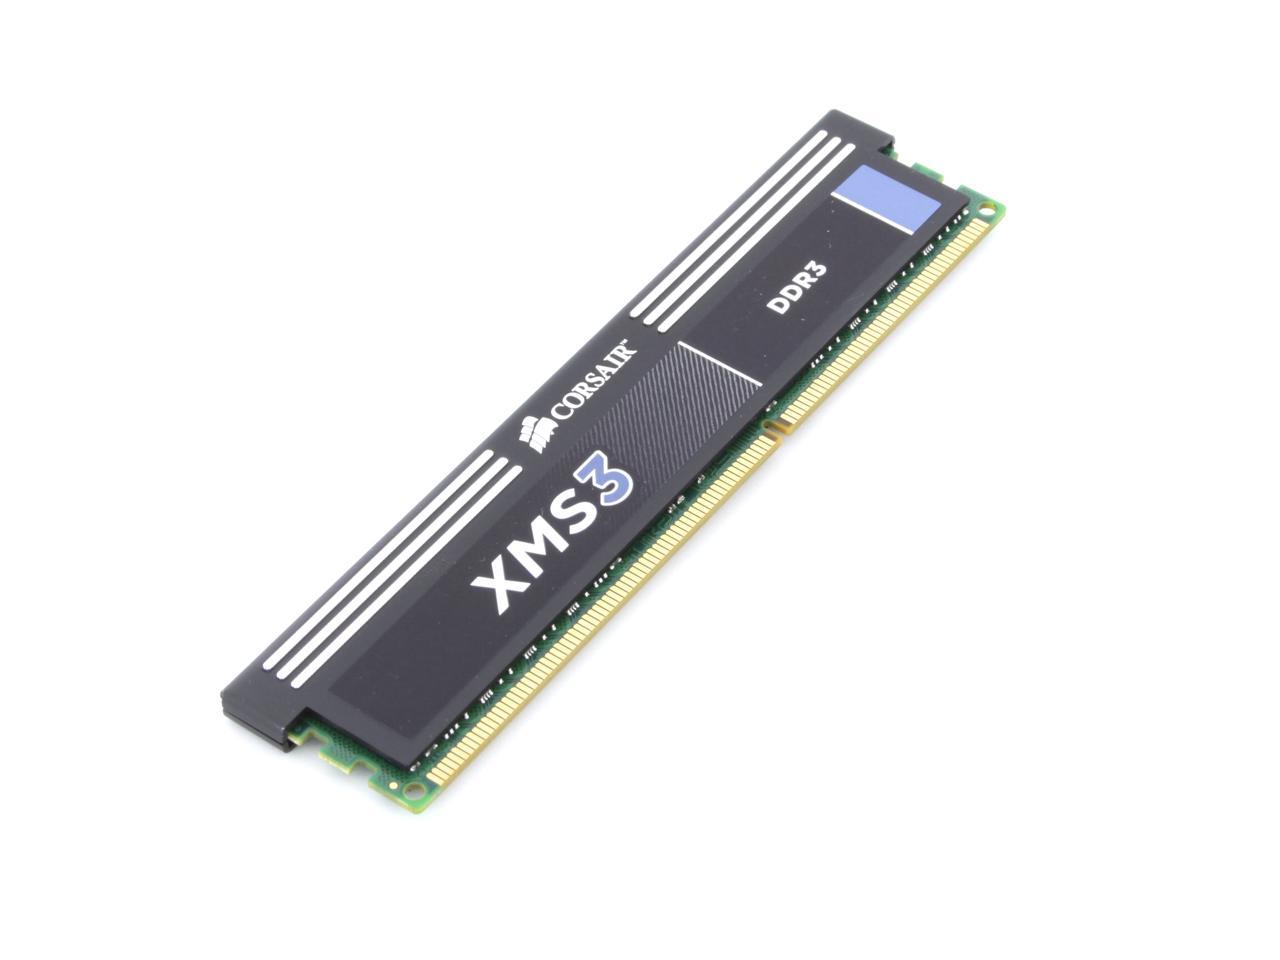 Corsair XMS3 2GB DDR3 1333MHz C9 Memory DIMM DRAM CMX8GX3MA1333C9 1 DIMM 